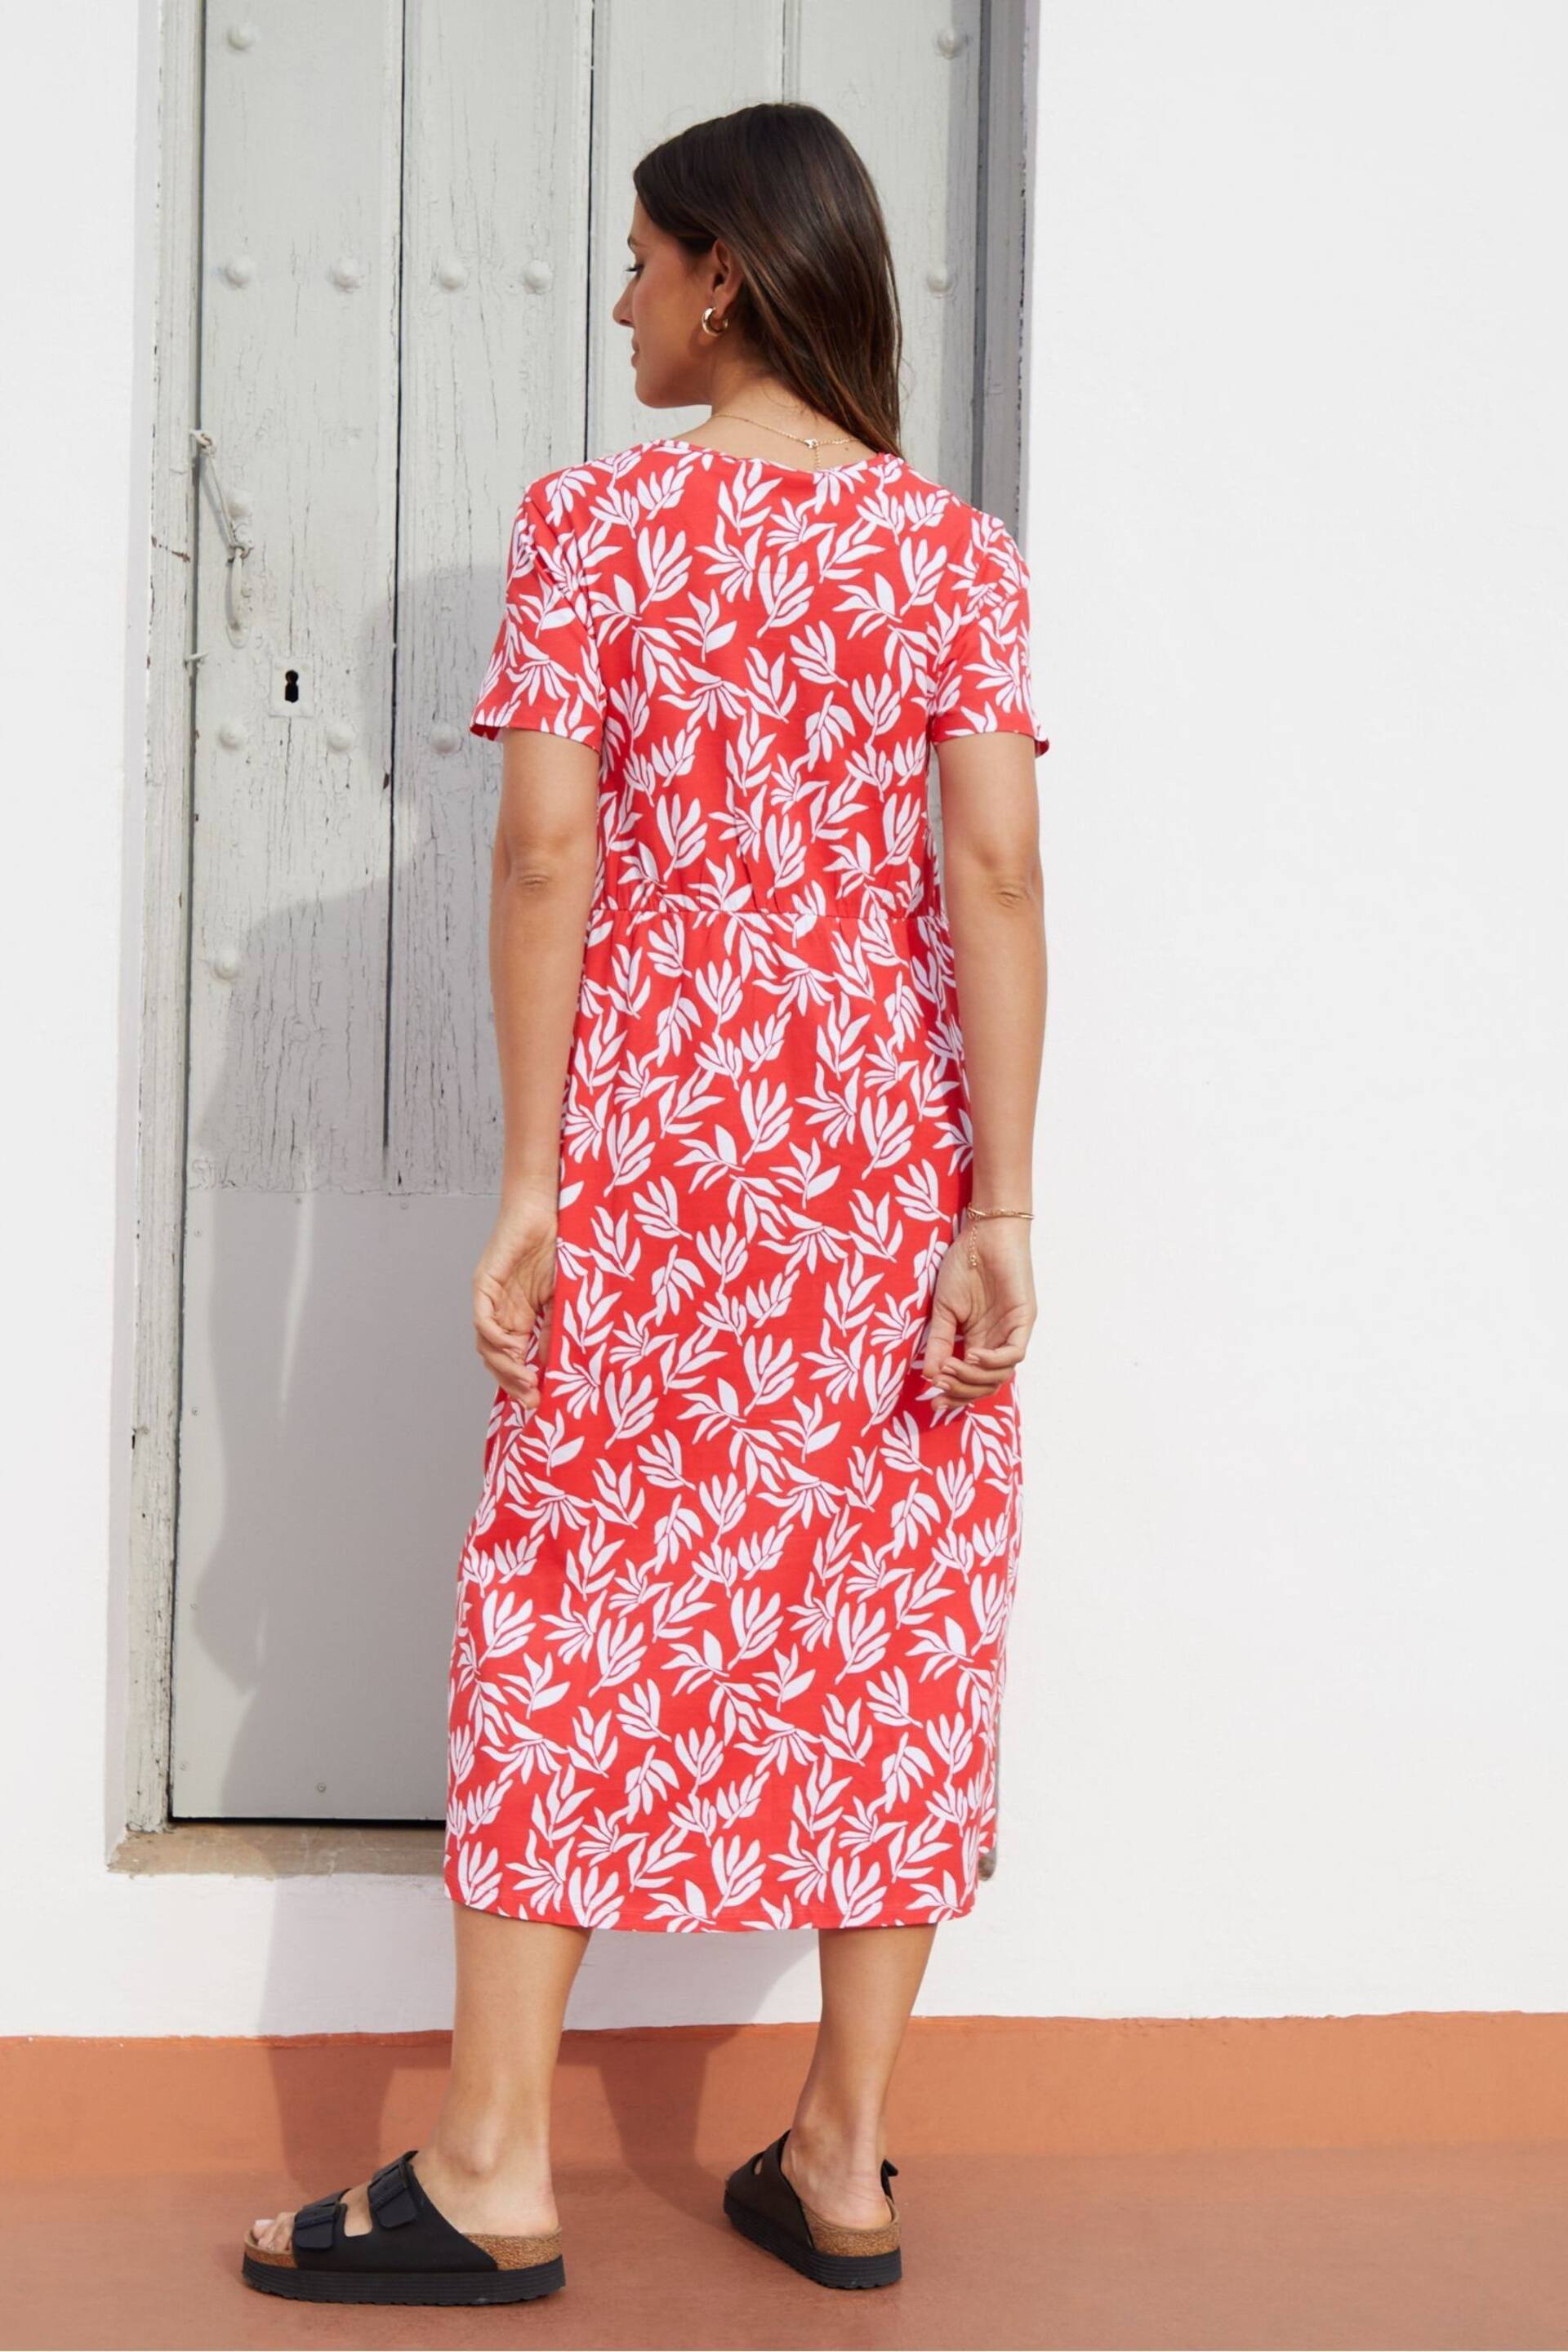 Threadbare Red Cotton Smock-Style Midi Dress - Image 2 of 4